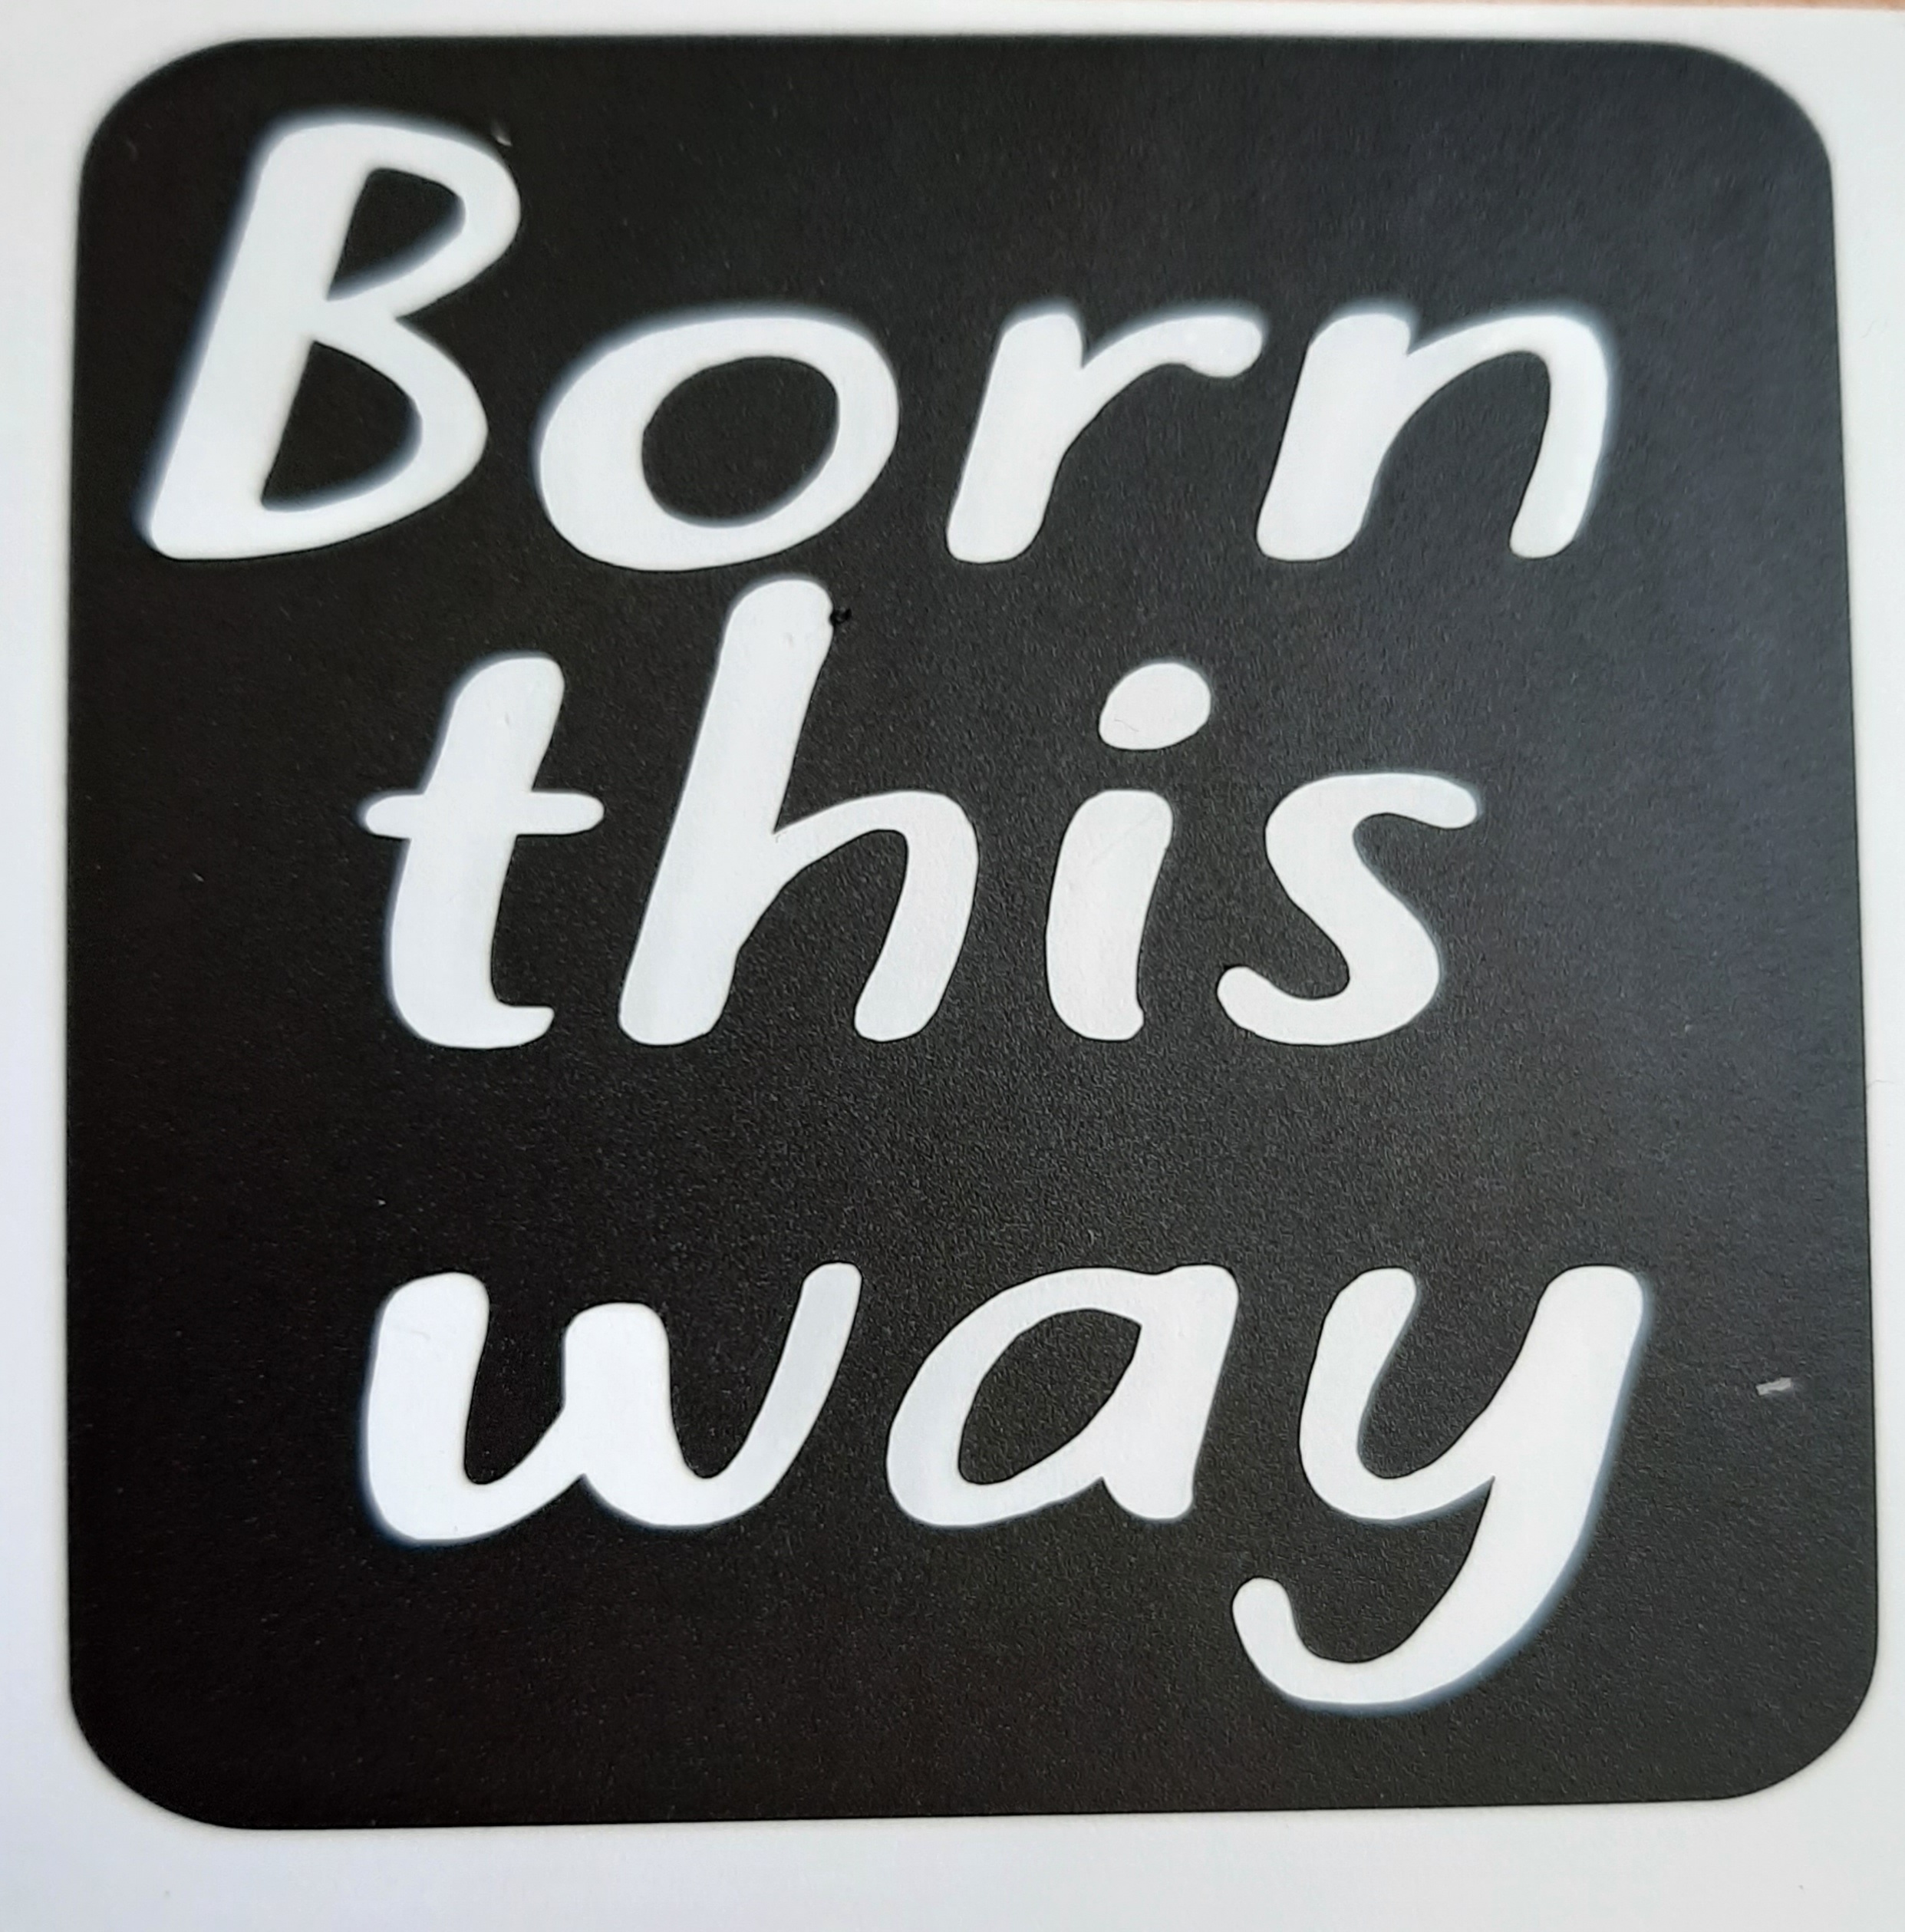 born this way